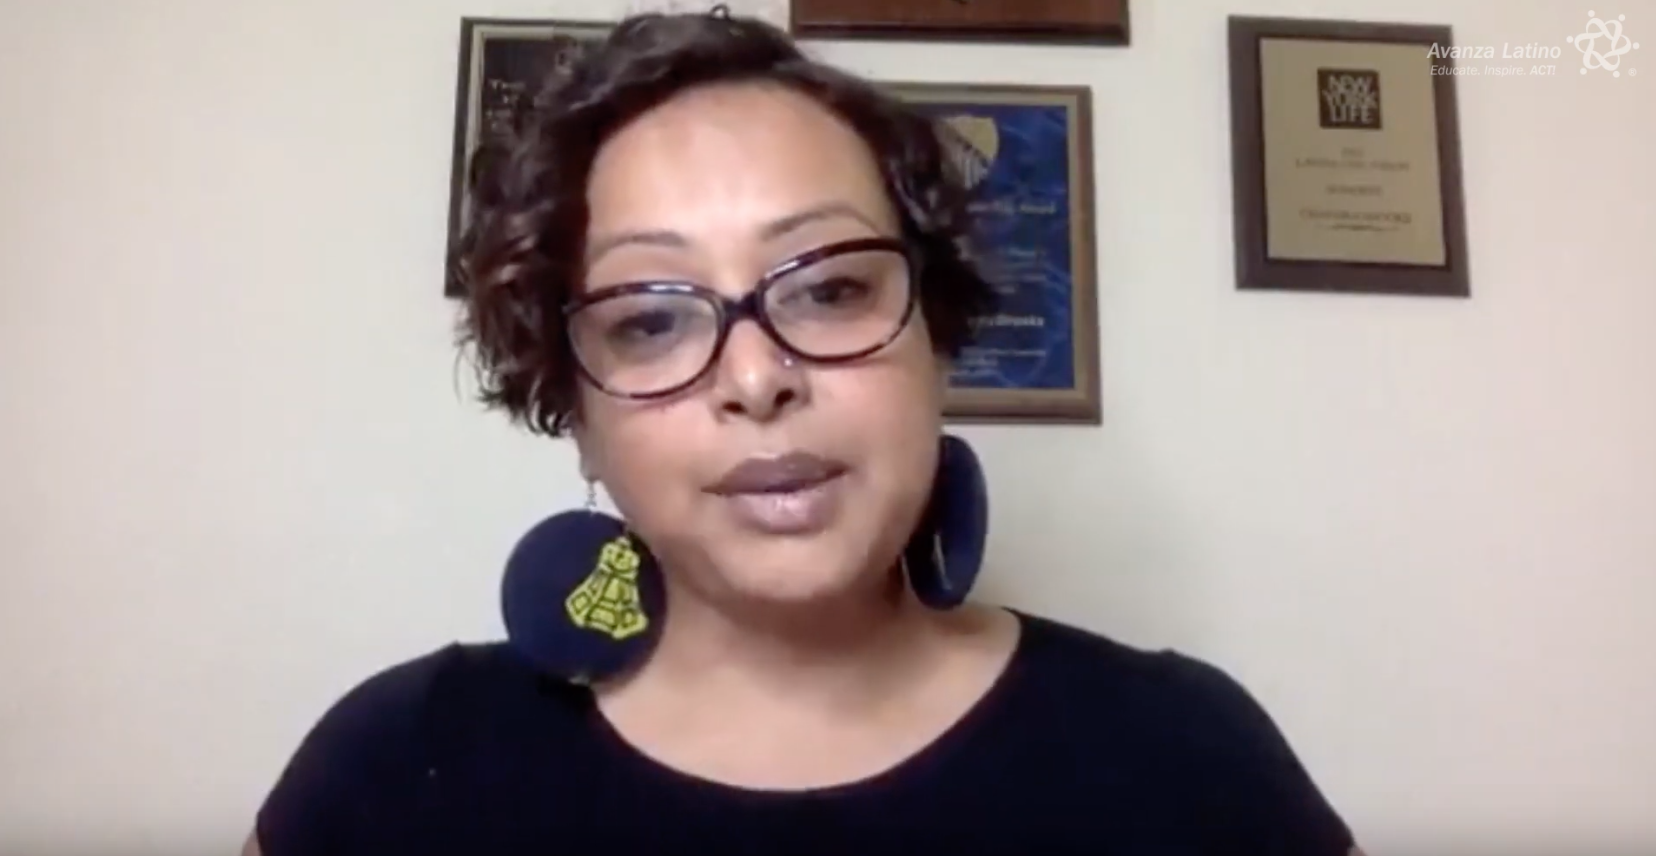 Avanza Latino: Chandra Brooks Women’s Rights Advocate “Speak Like a Boss” Video 2